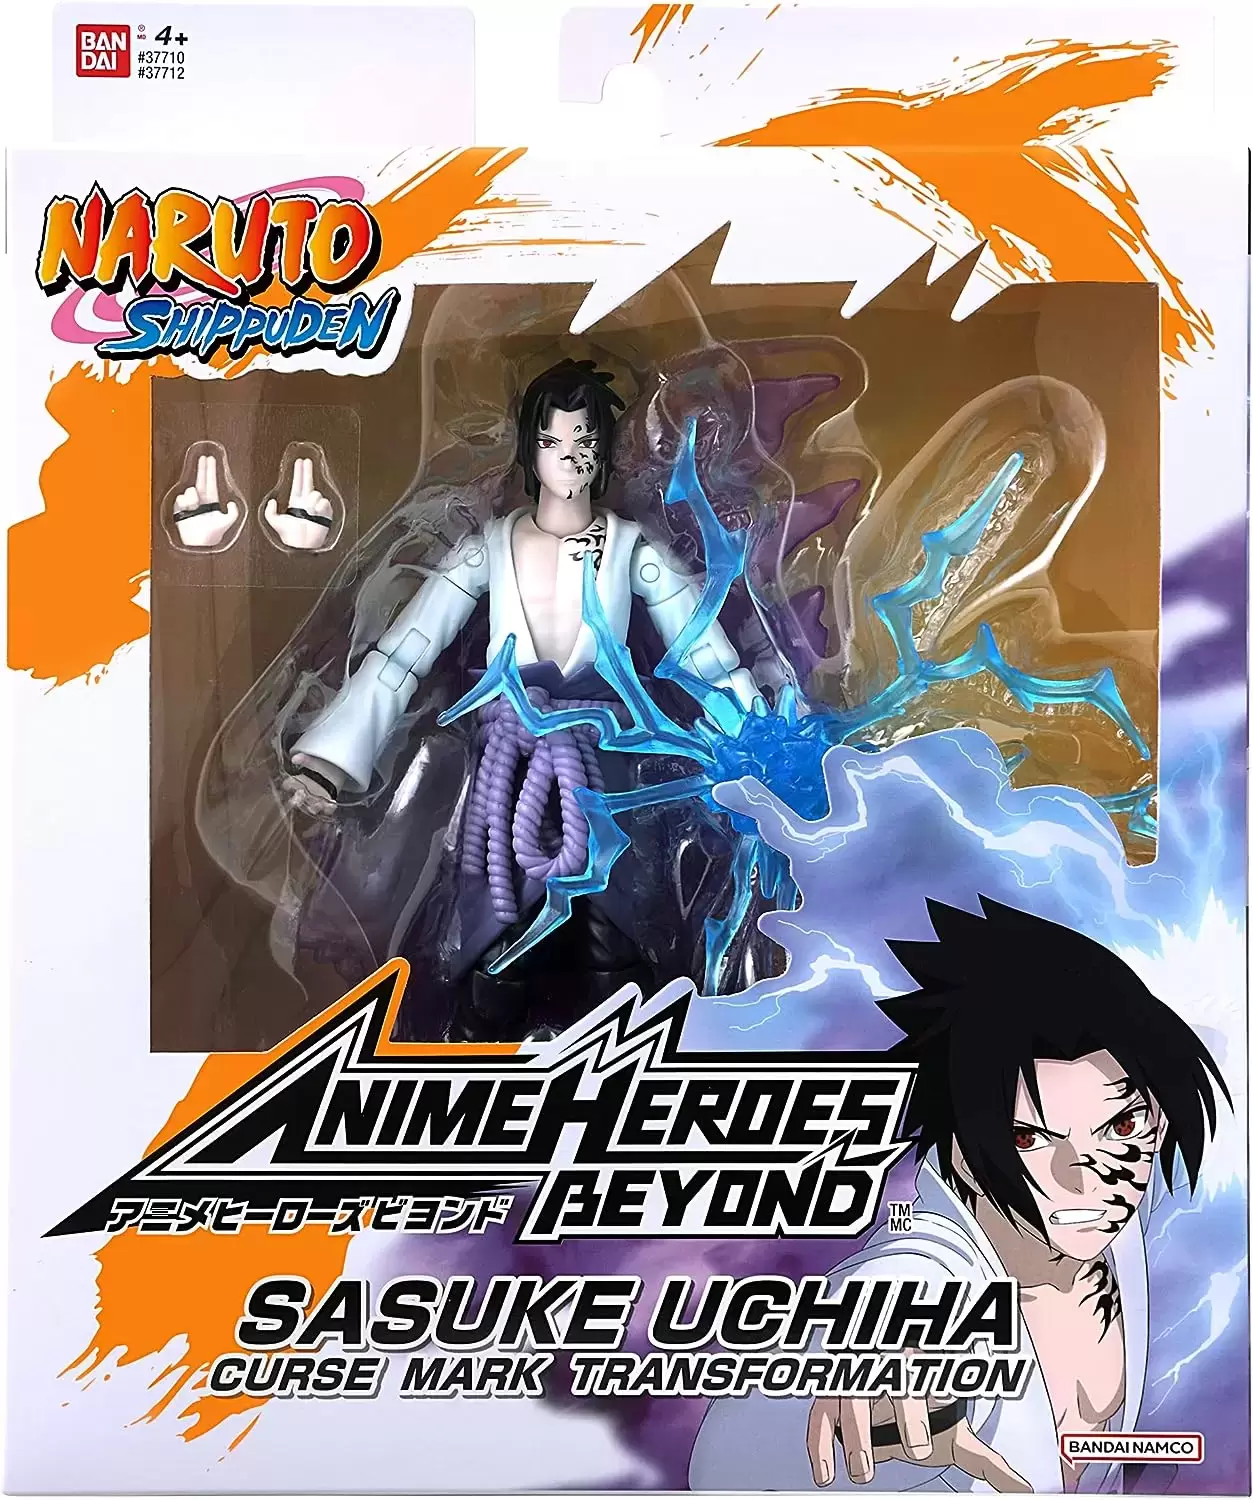 Anime Heroes - Bandai - Sasuke Uchiha - Anime Heroes Beyond